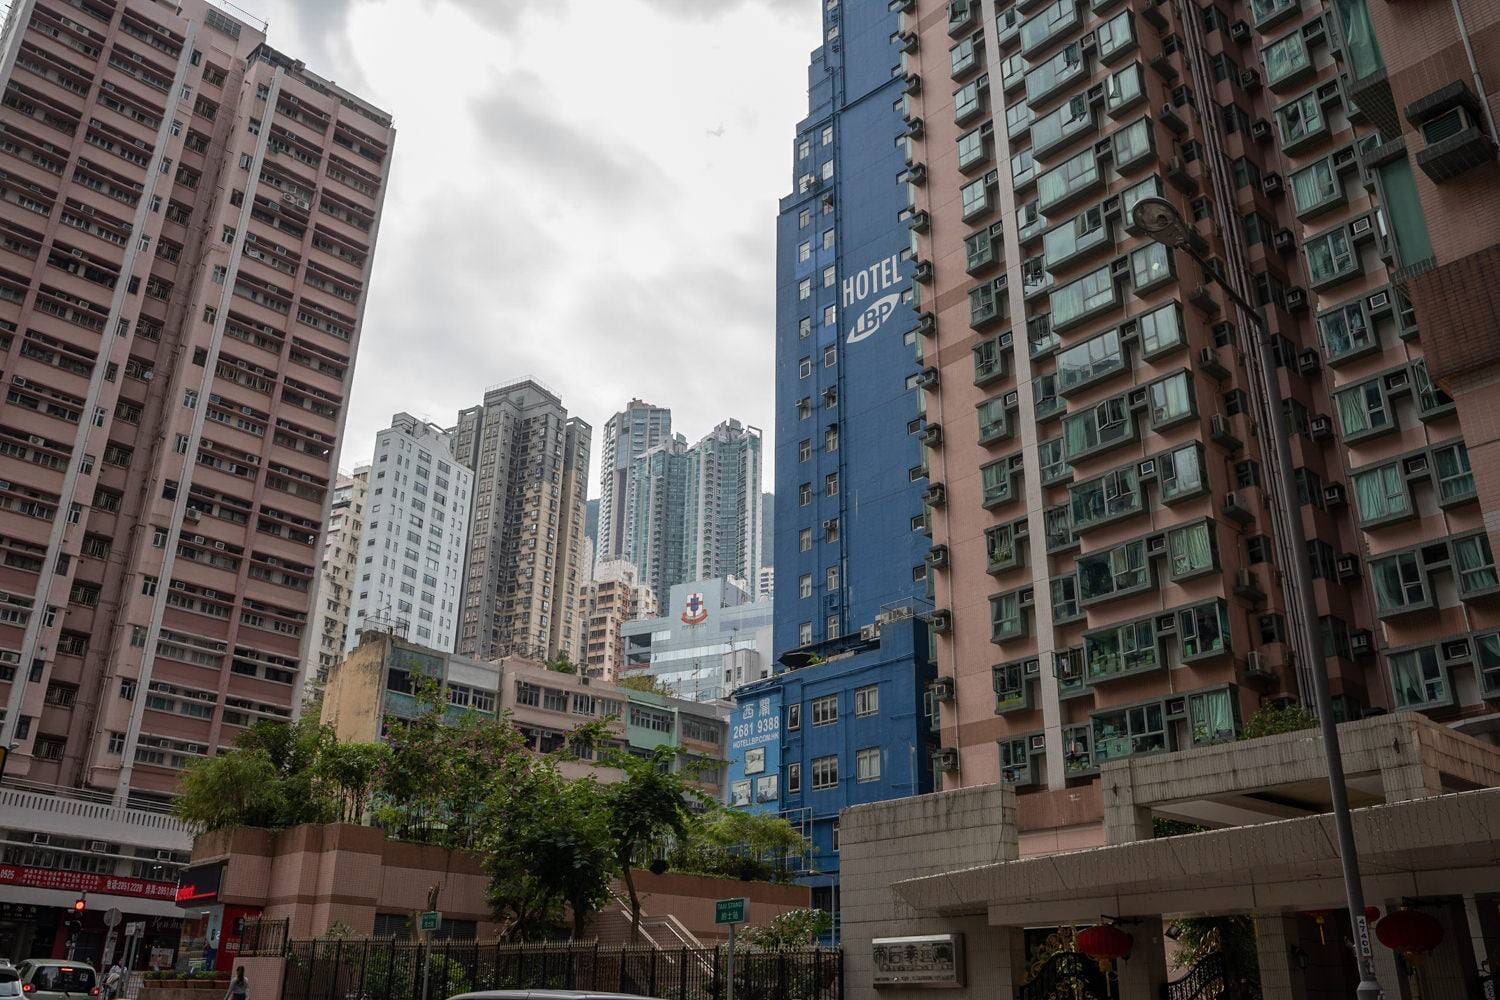 Hong Kong Street Photography Vol.2 / Jun 2019 - Arbitro